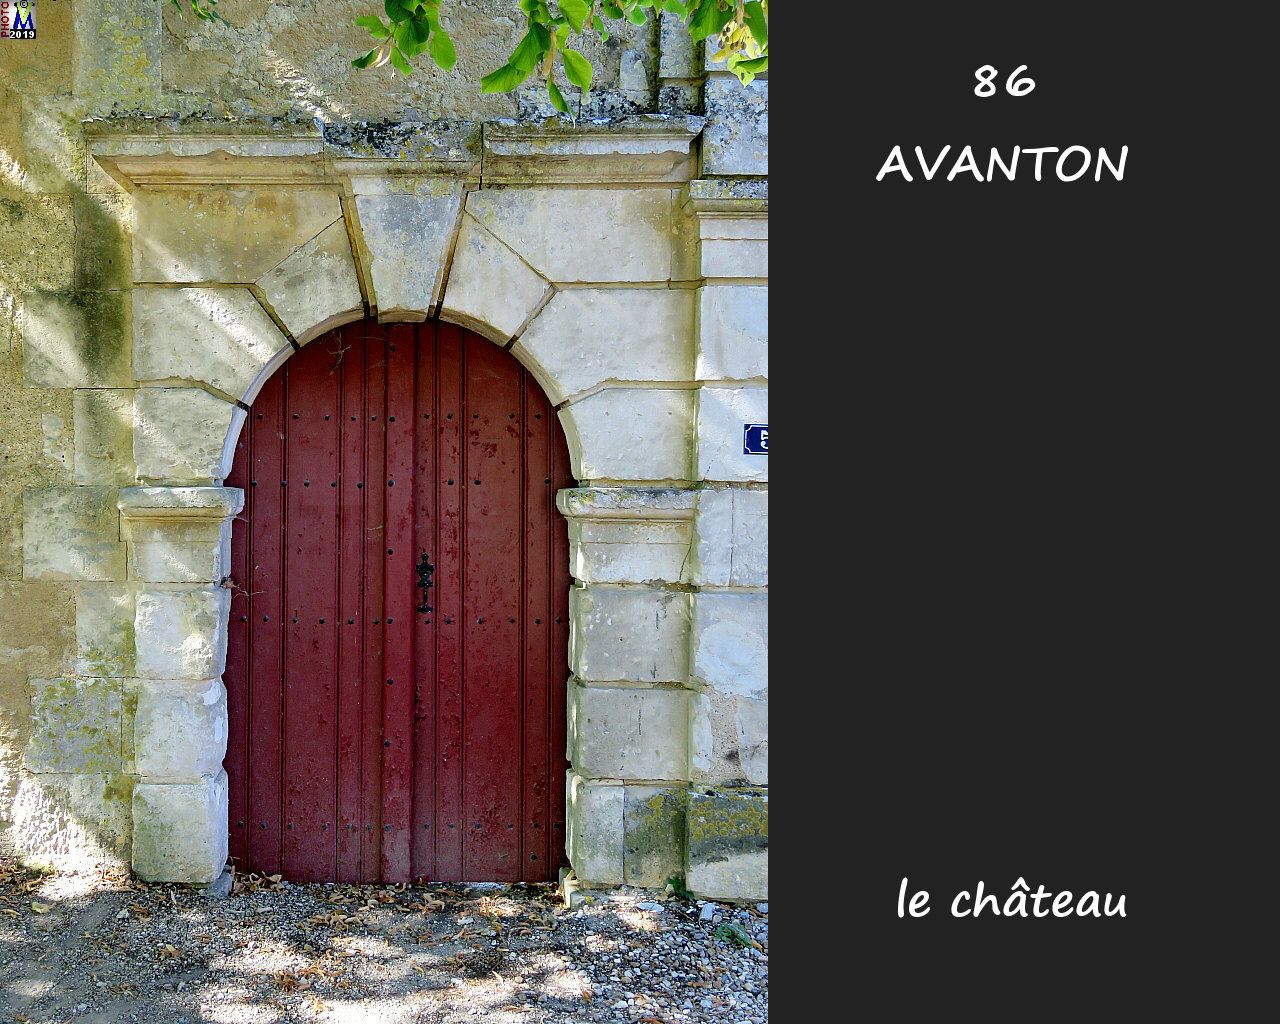 86AVANTON_chateau_120.jpg